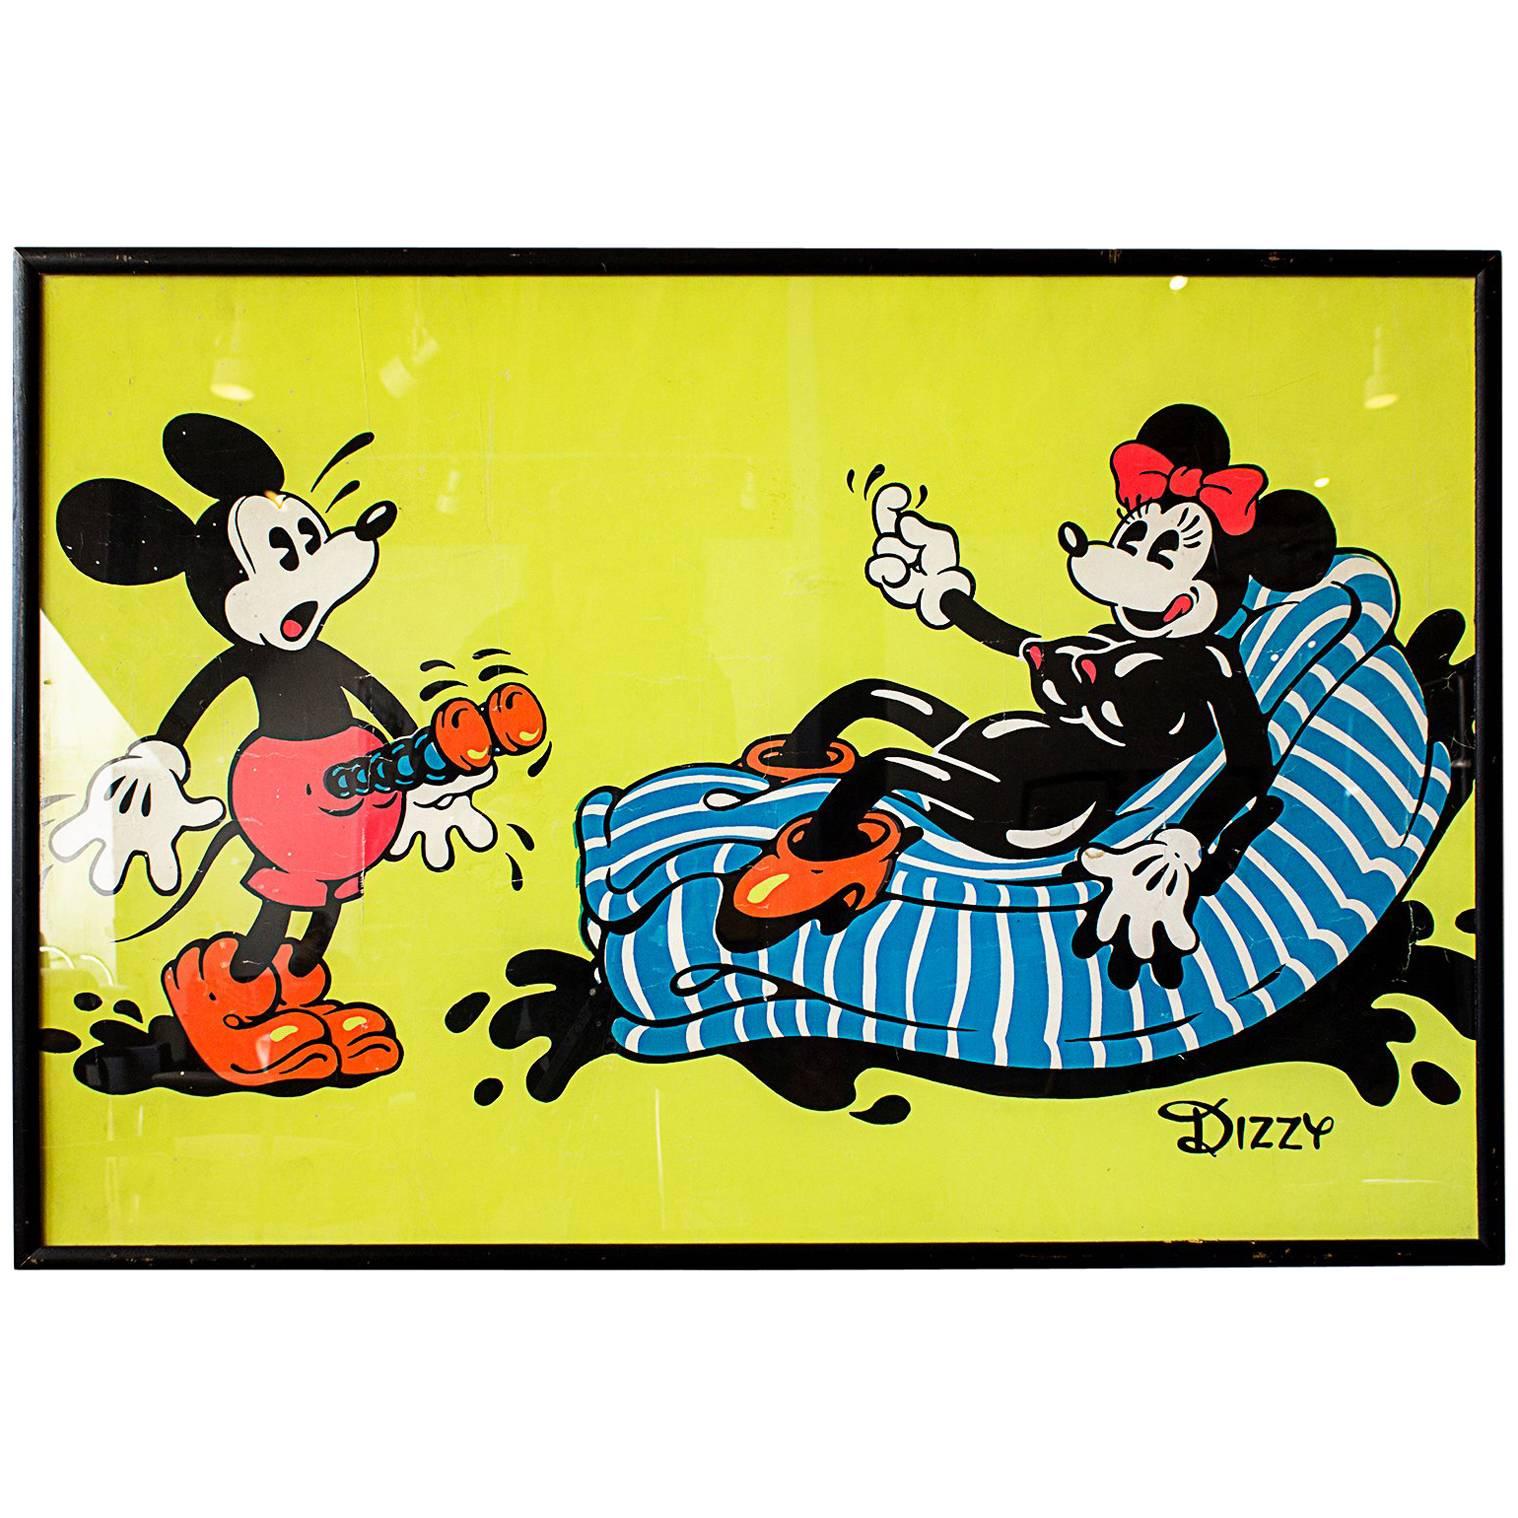 Vintage Mickey Mouse Black Light Print Signed, circa 1970